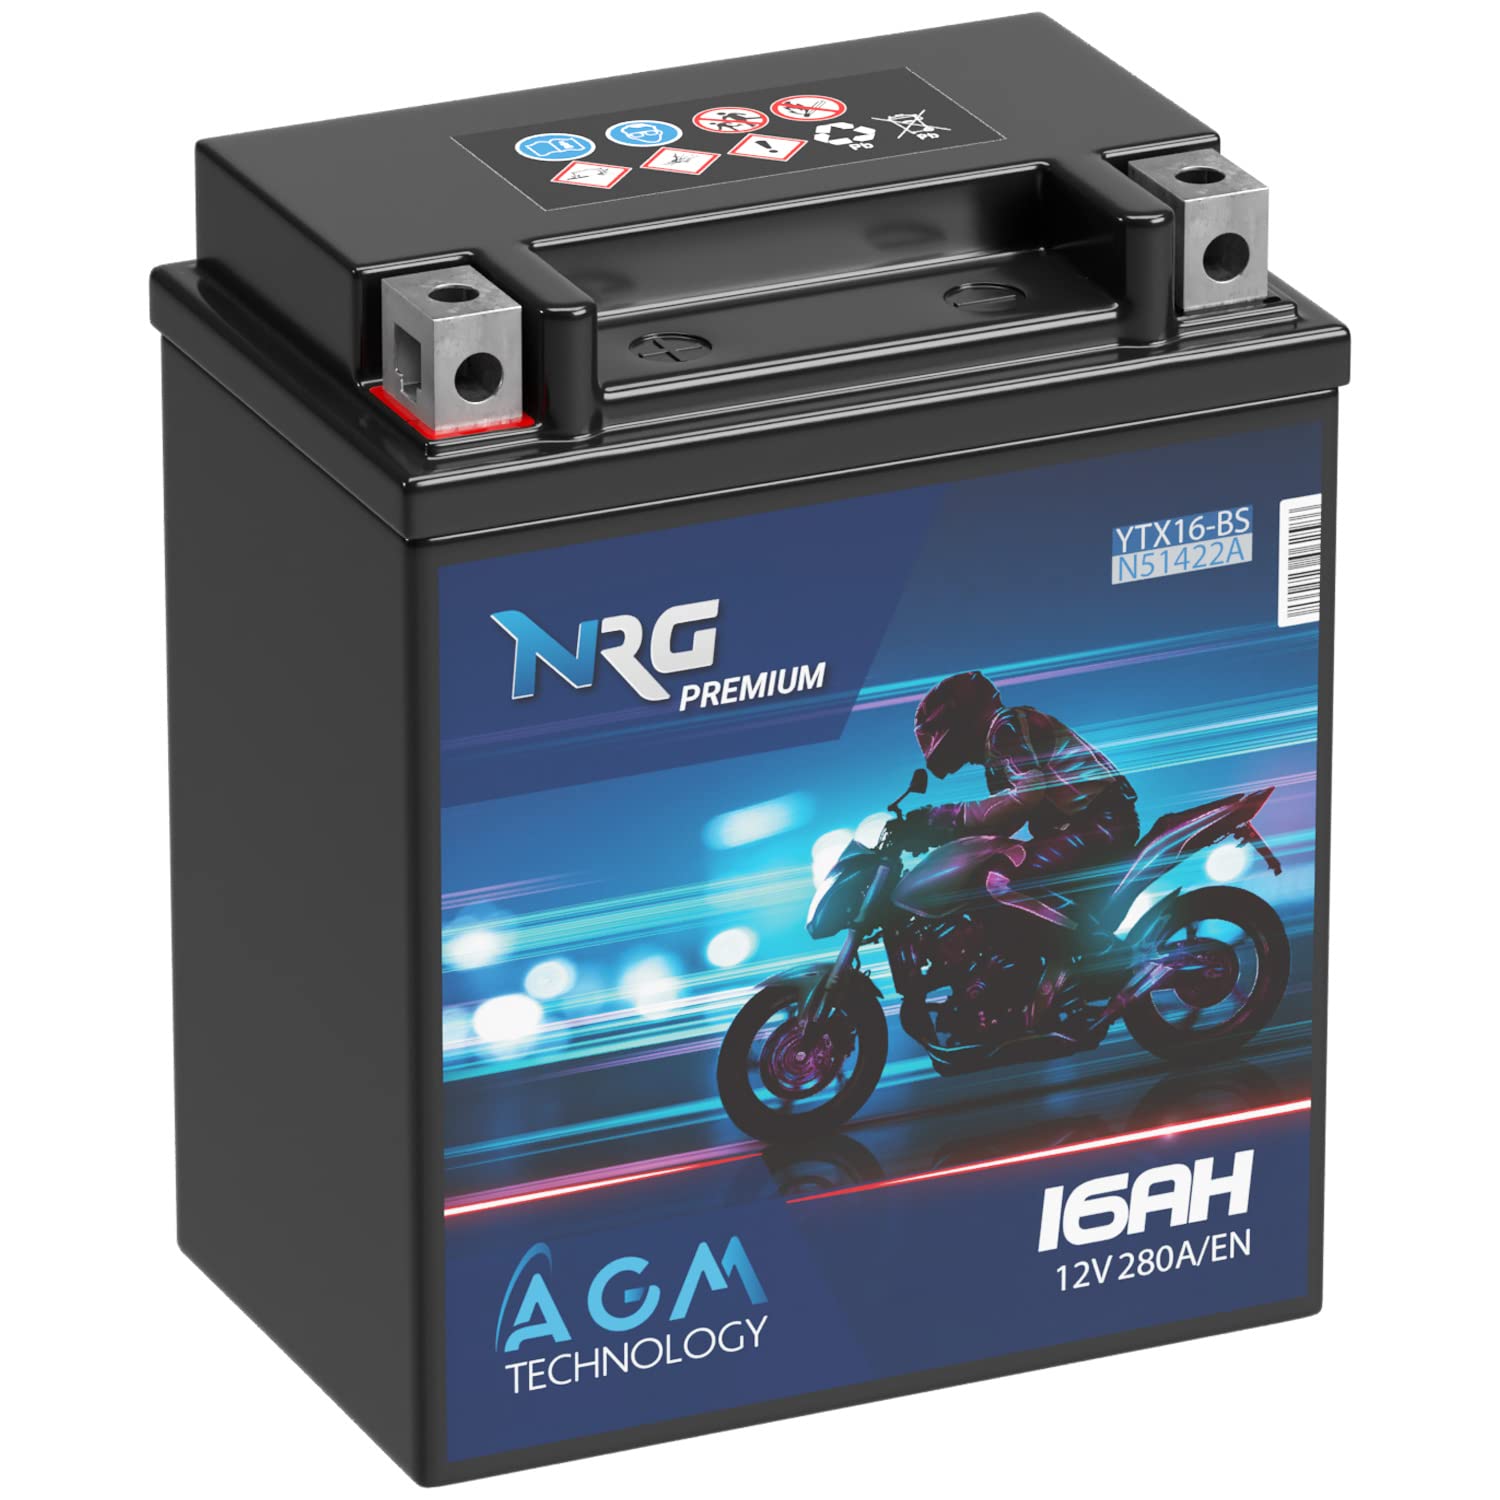 NRG Premium YTX16-BS AGM Motorradbatterie 16Ah 12V 280A/EN ersetzt 14Ah 15Ah Batterie 51422 YTX16-4 YTX16BS ETX16-BS auslaufsicher wartungsfrei von NRG PREMIUM